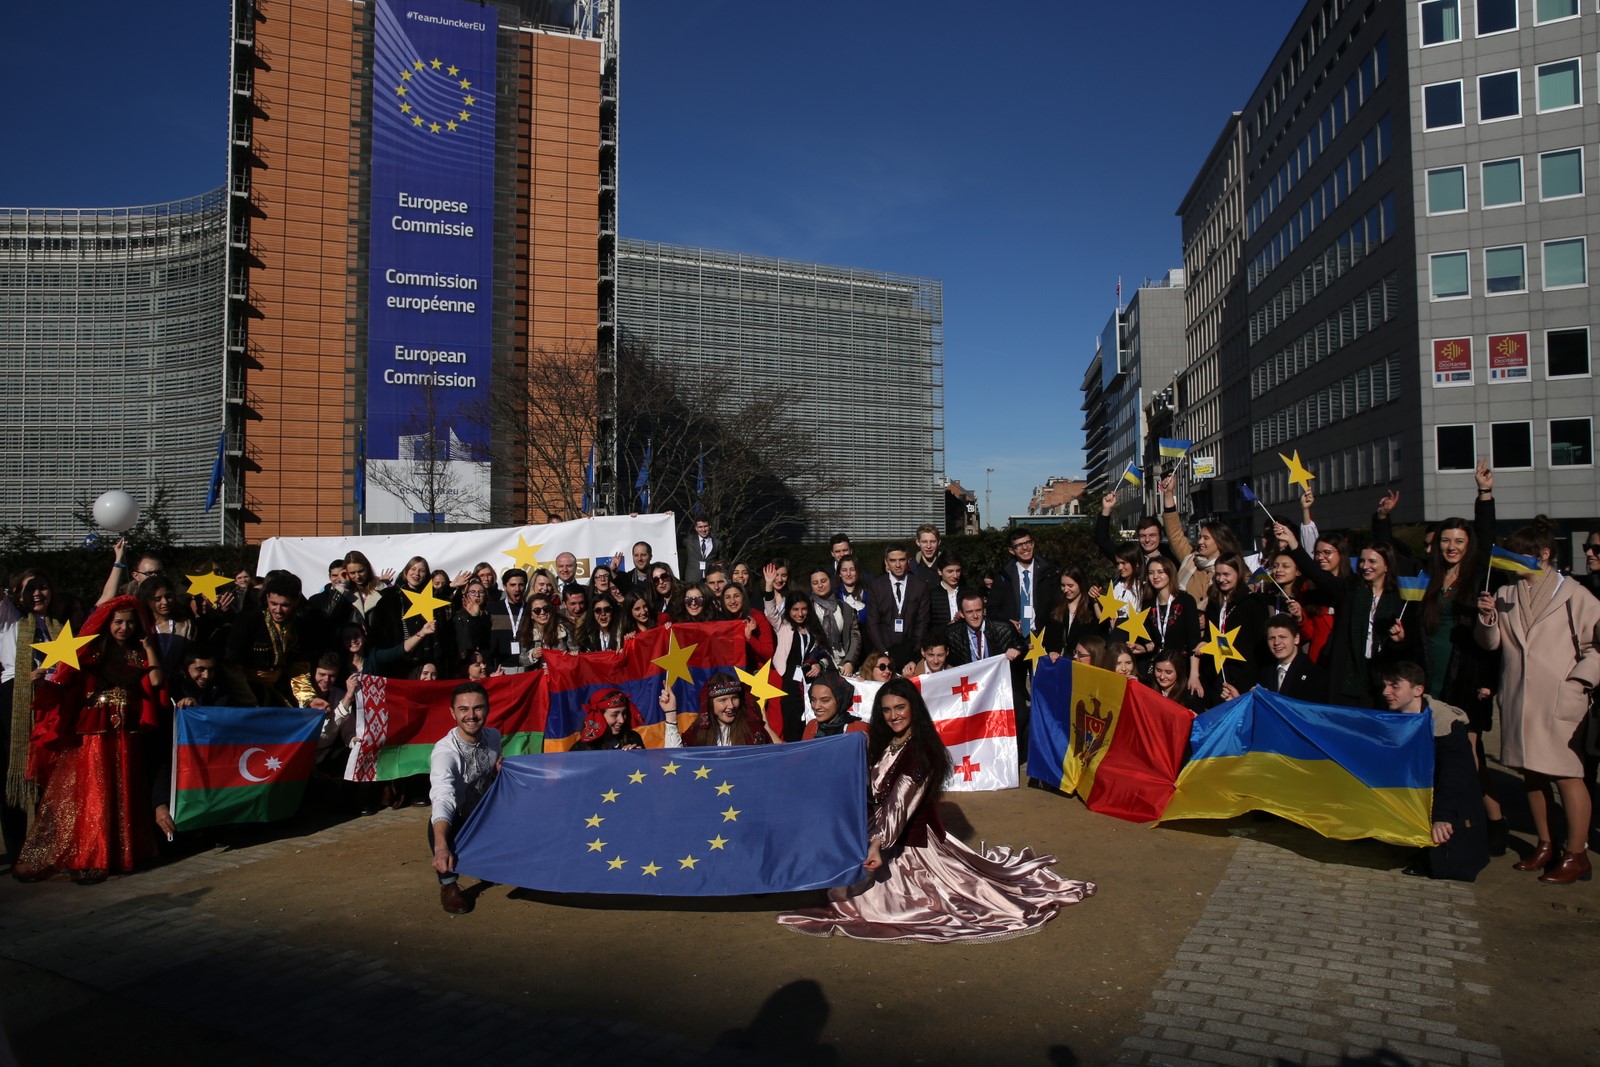 ‘Young European Ambassadors’ kick off Eastern Partnership’s 10th anniversary celebrations